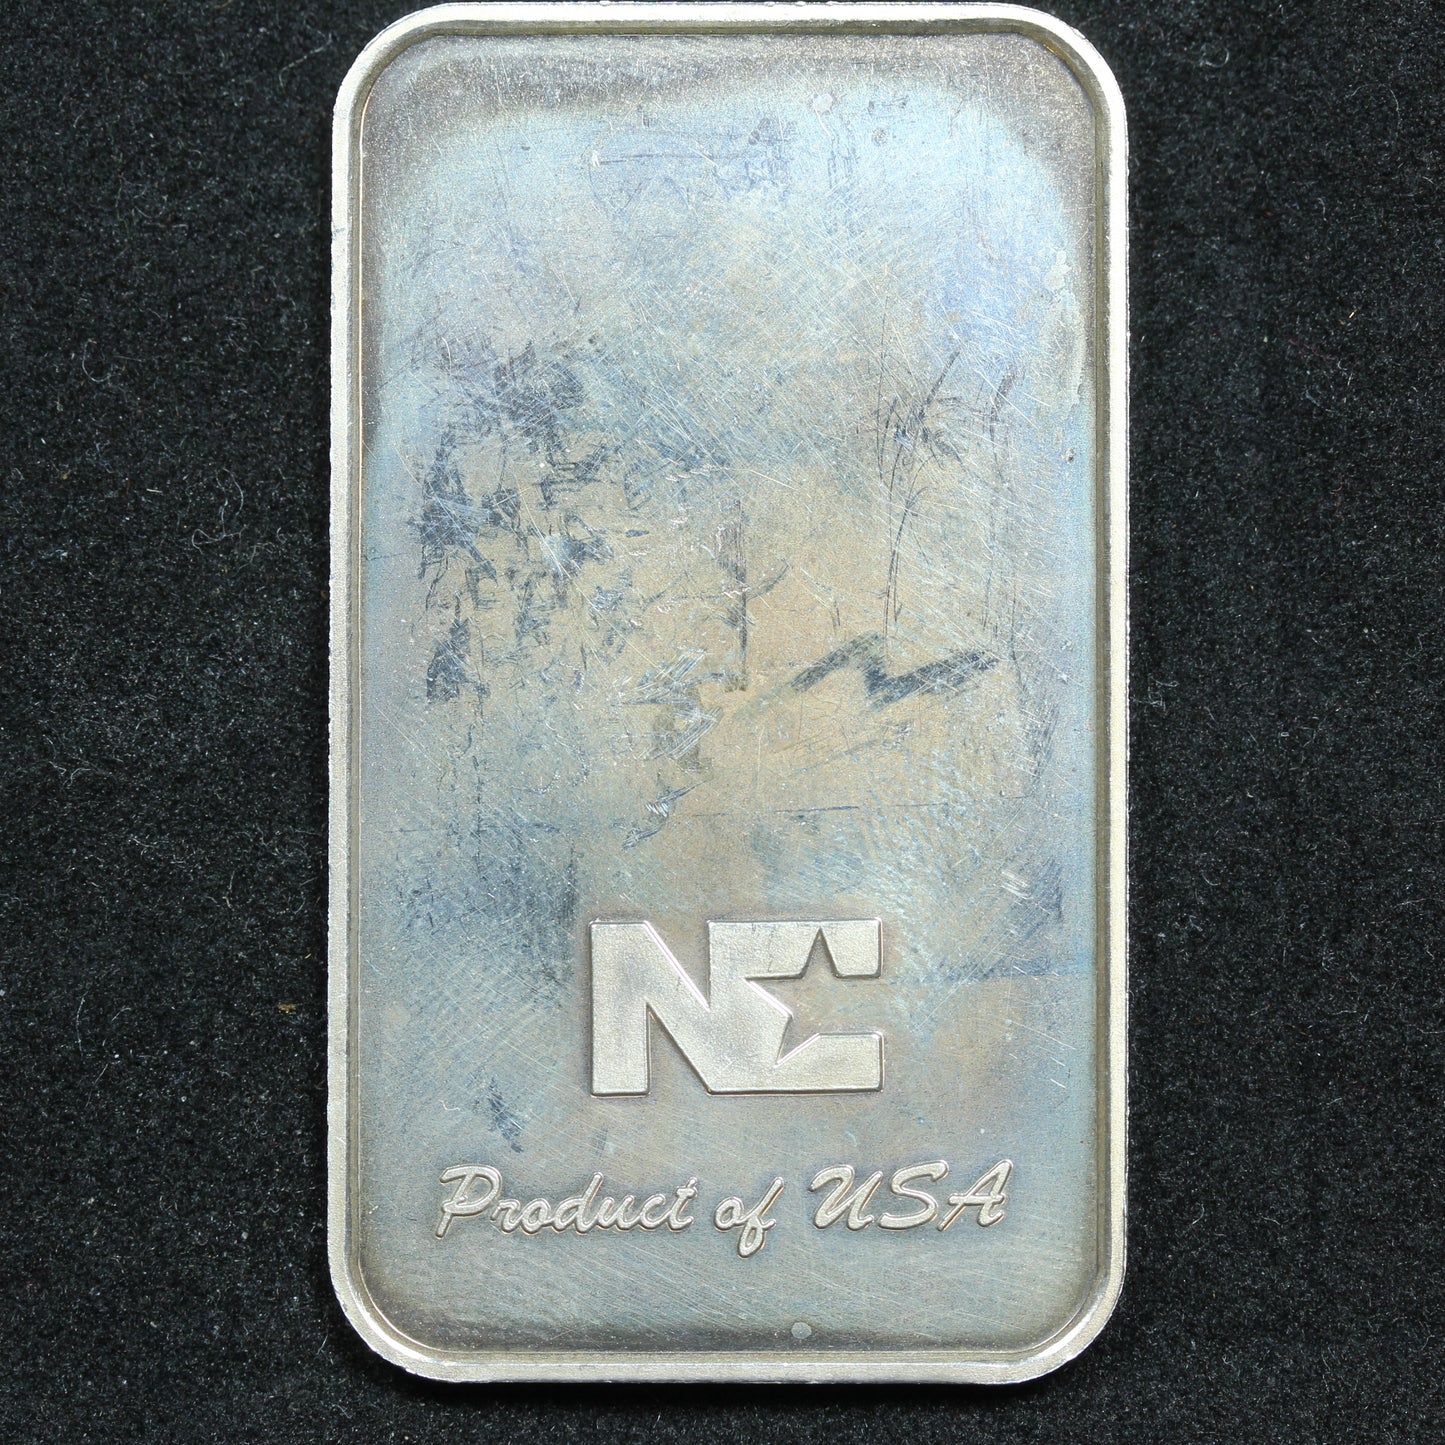 National Mint 1 Troy Oz .999 Fine Silver Ingot Bar - Congratulations